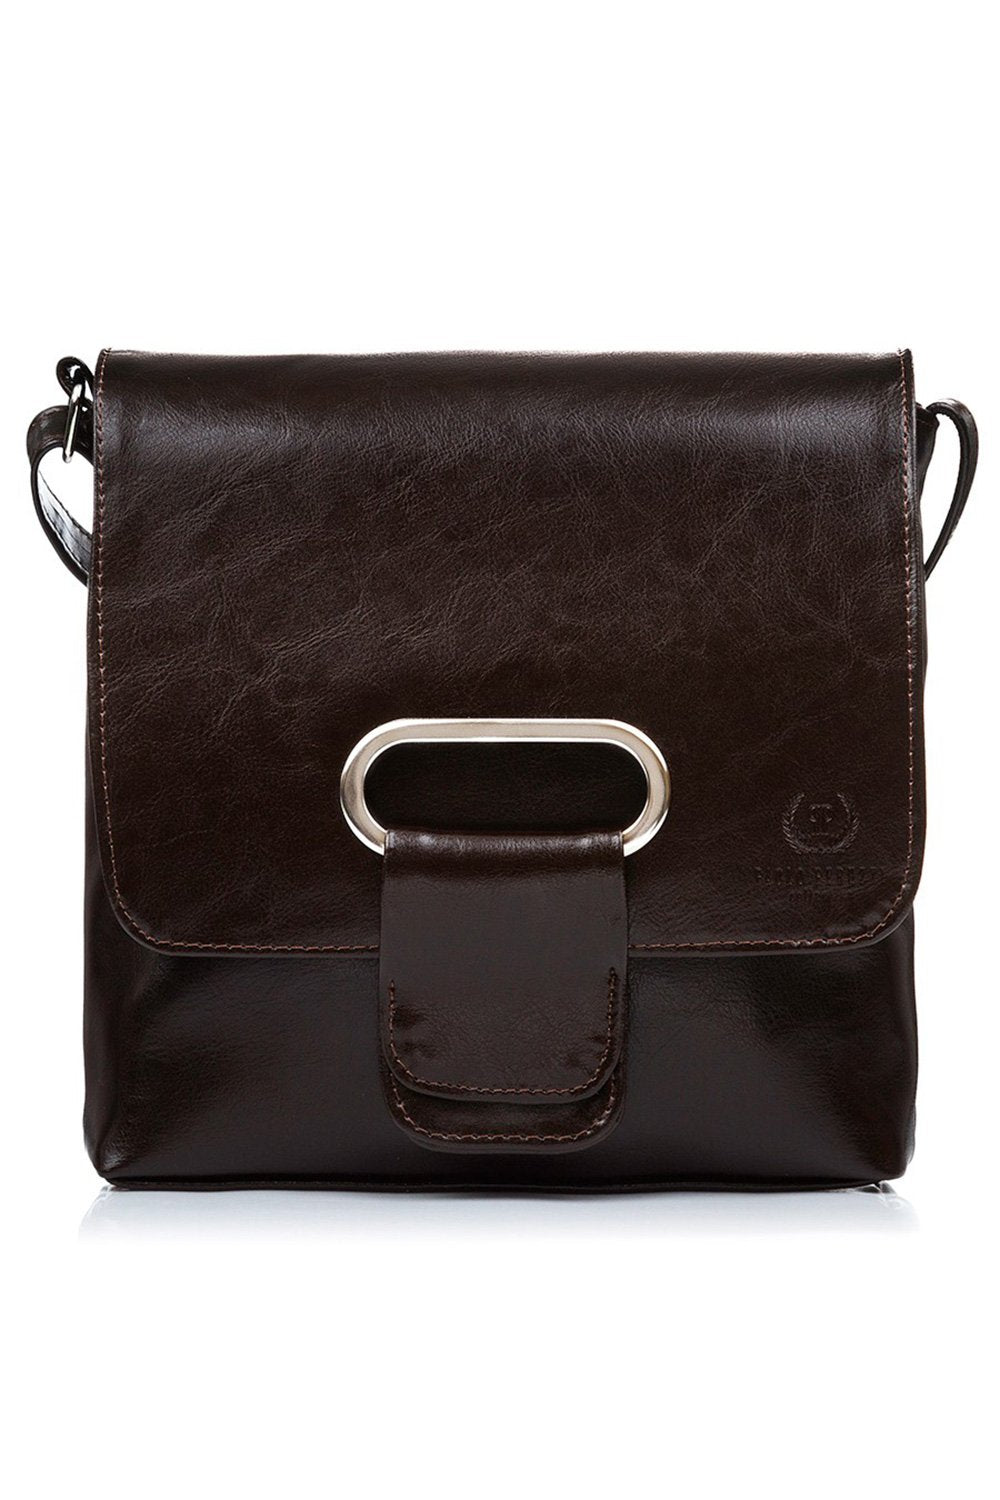 Natural leather bag model 173189 Hurtownia Galanter Posh Styles Apparel